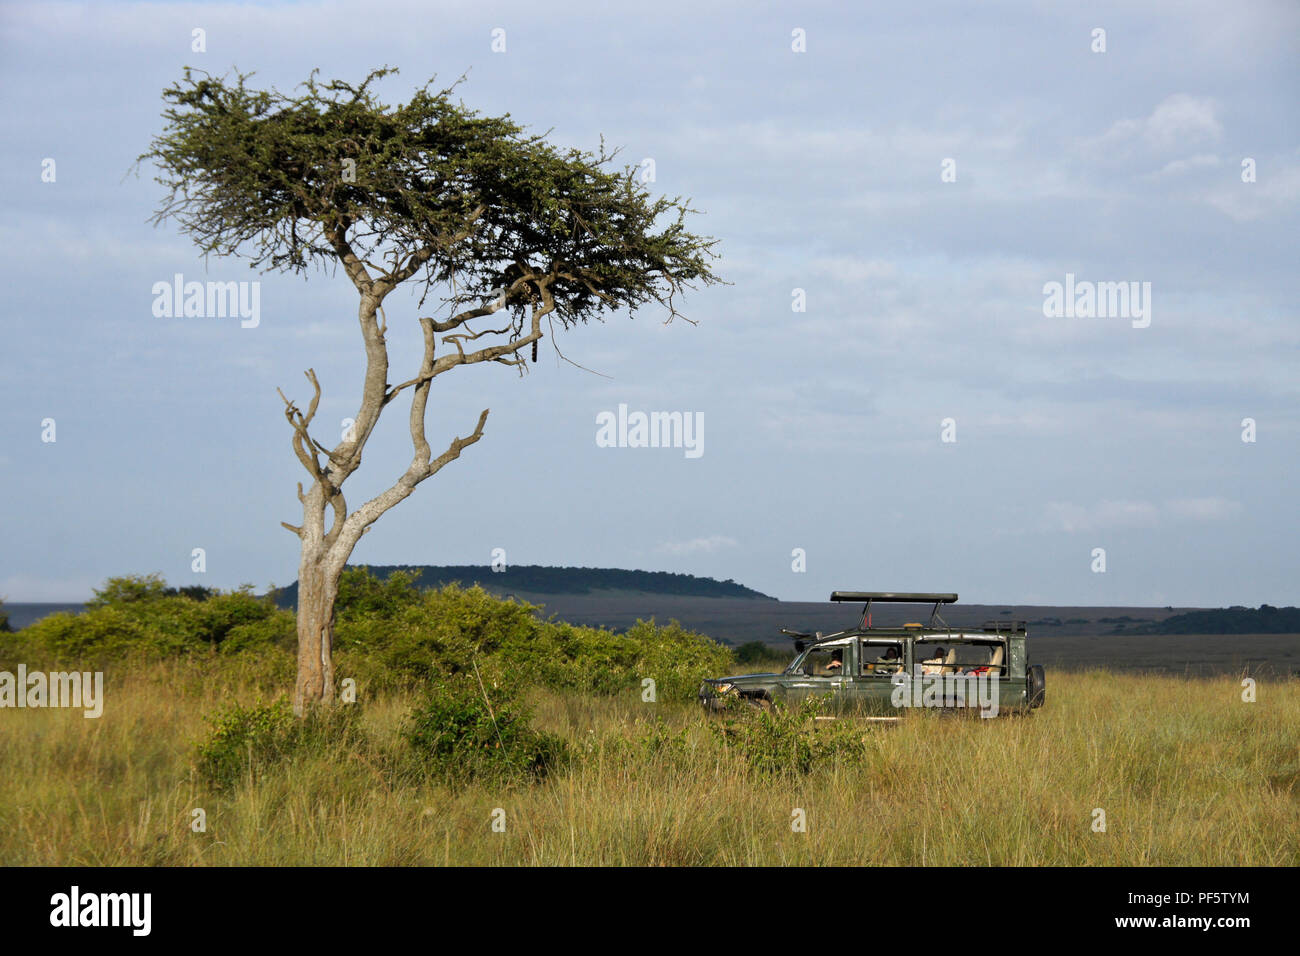 Tourists in safari vehicle under tree with camouflaged leopard, Masai Mara Game Reserve, Kenya Stock Photo